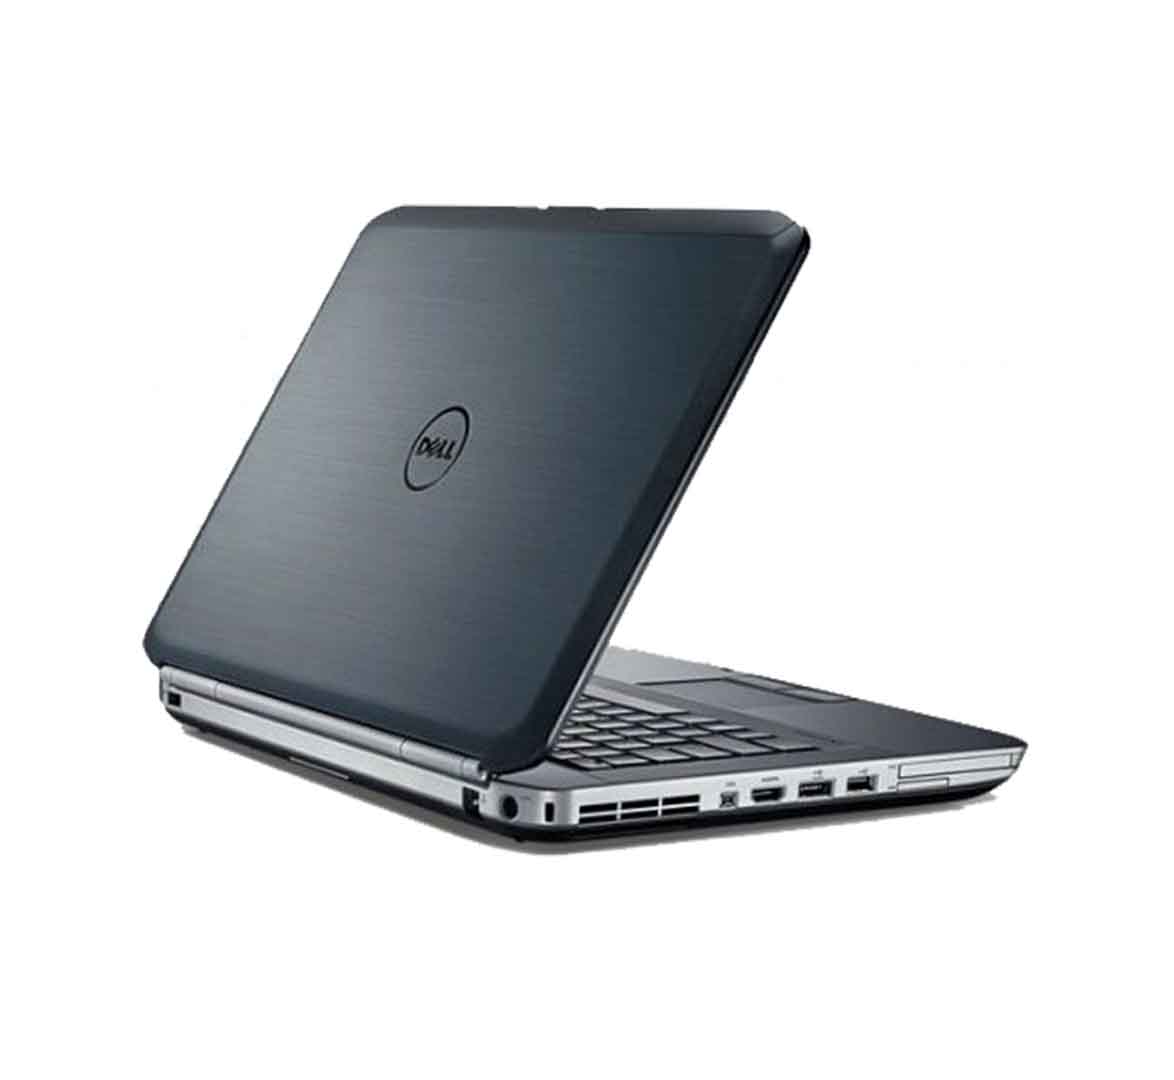 Dell Latitude E5420 Business Laptop, Intel Core i5-2nd Generation CPU, 4GB RAM, 320GB HDD, 14 Inch Display, Windows 10 Pro, Refurbished Laptop